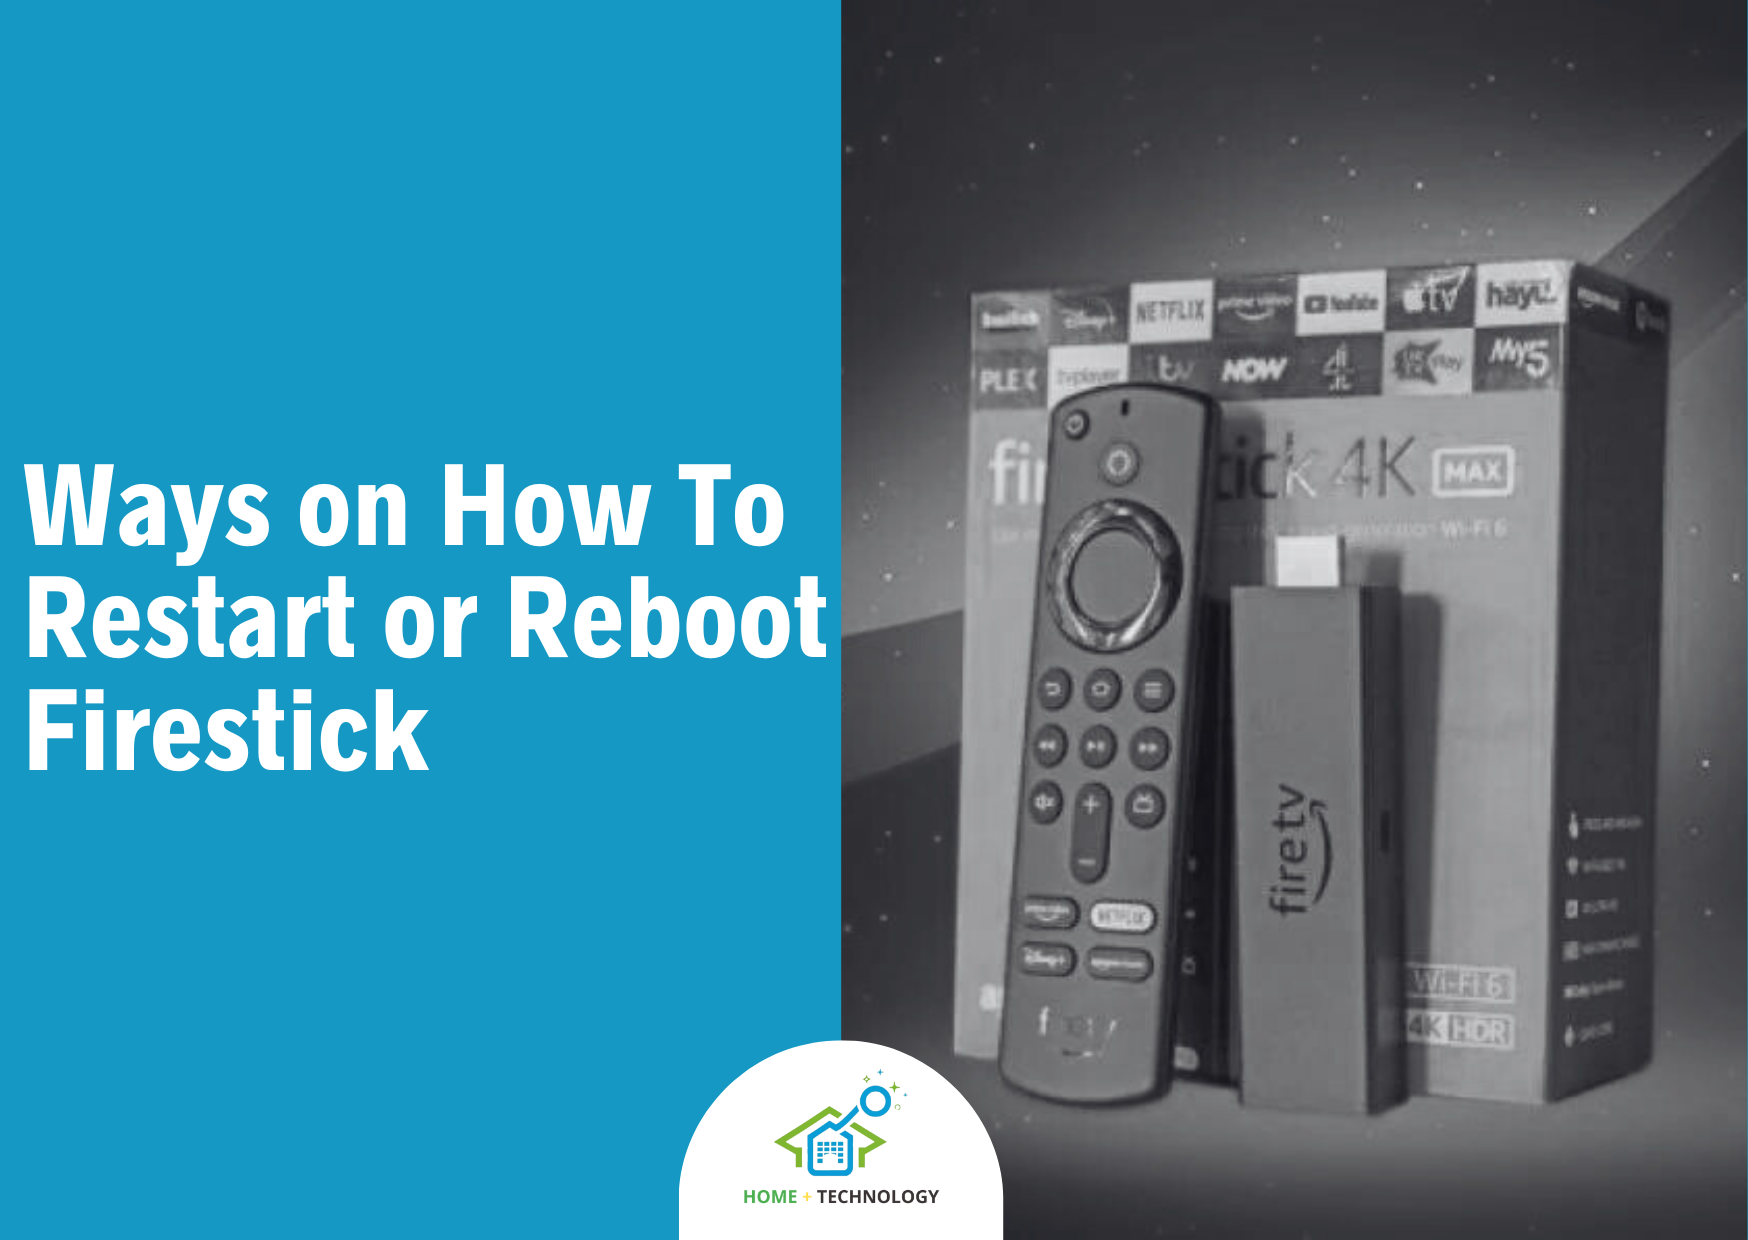 4 Ways How To Reboot or Restart Firestick